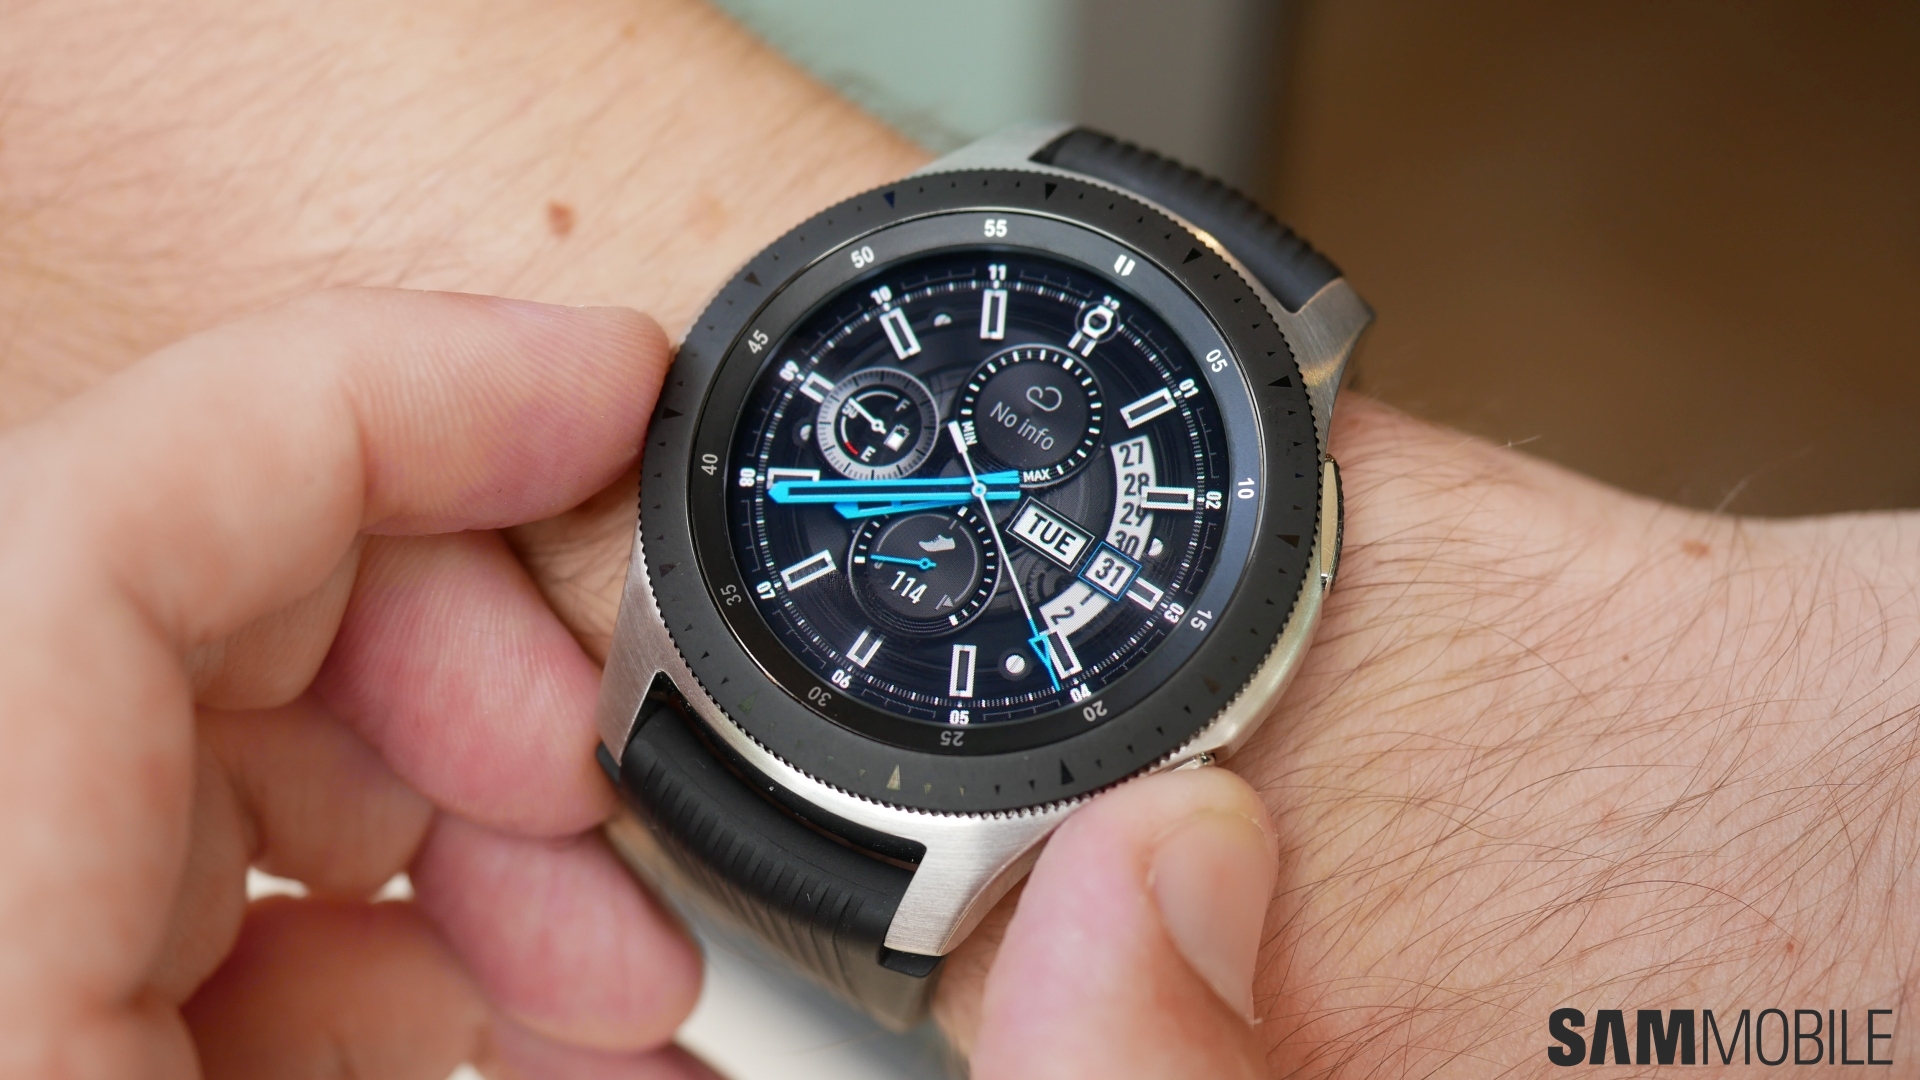 Samsung galaxy watch дата. Самсунг вотч 46мм. Samsung Gear watch 46мм. Samsung Galaxy watch SM-r800. Samsung Galaxy watch 3 46mm.